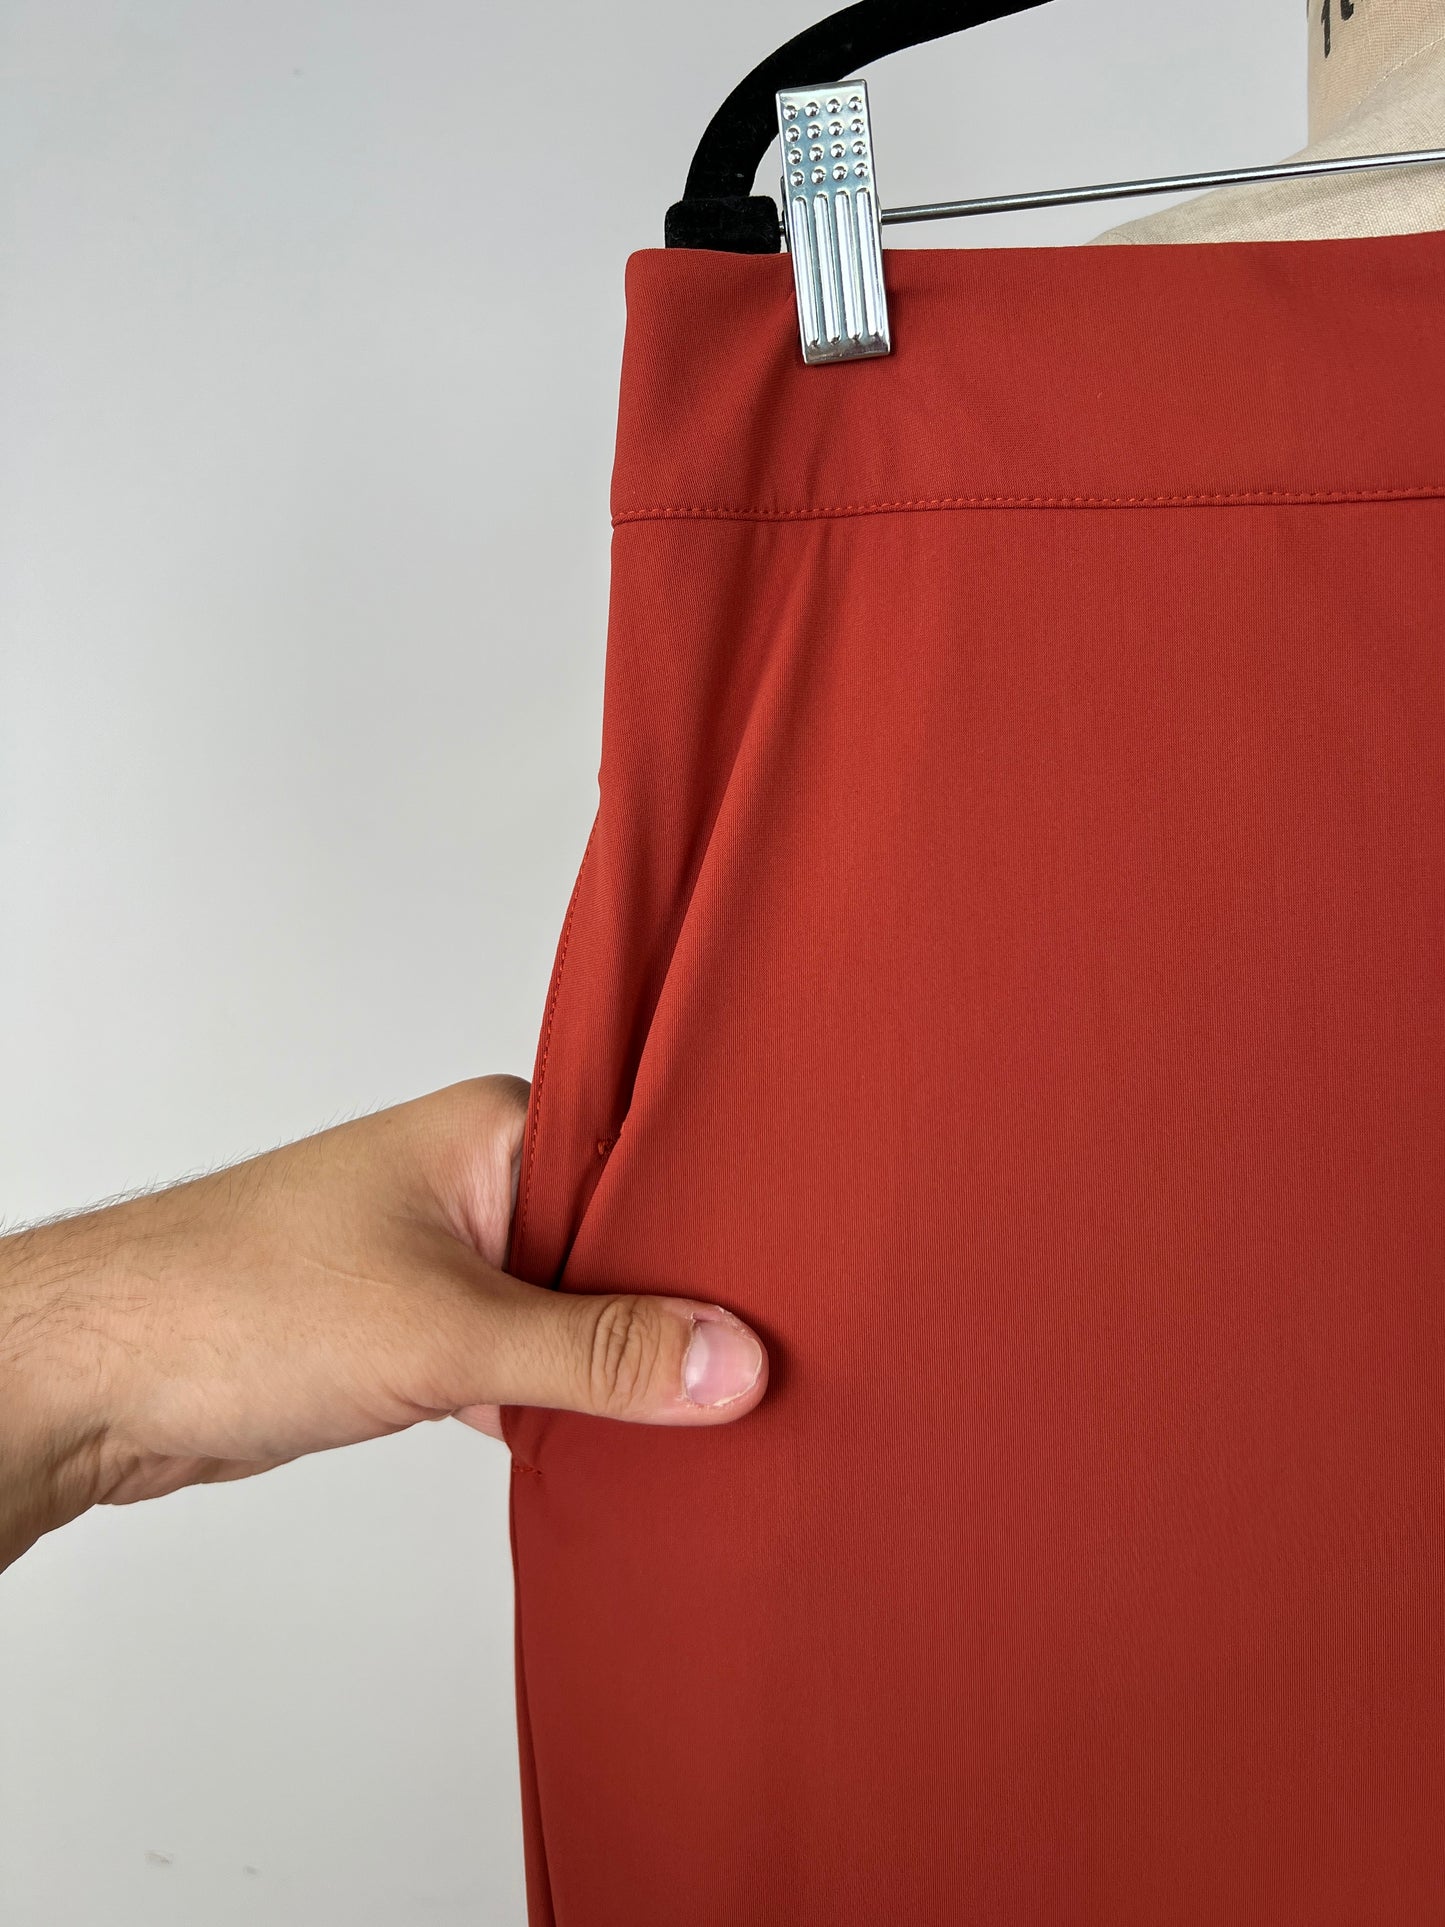 Pantalon terra cotta à poches boutons (XL)